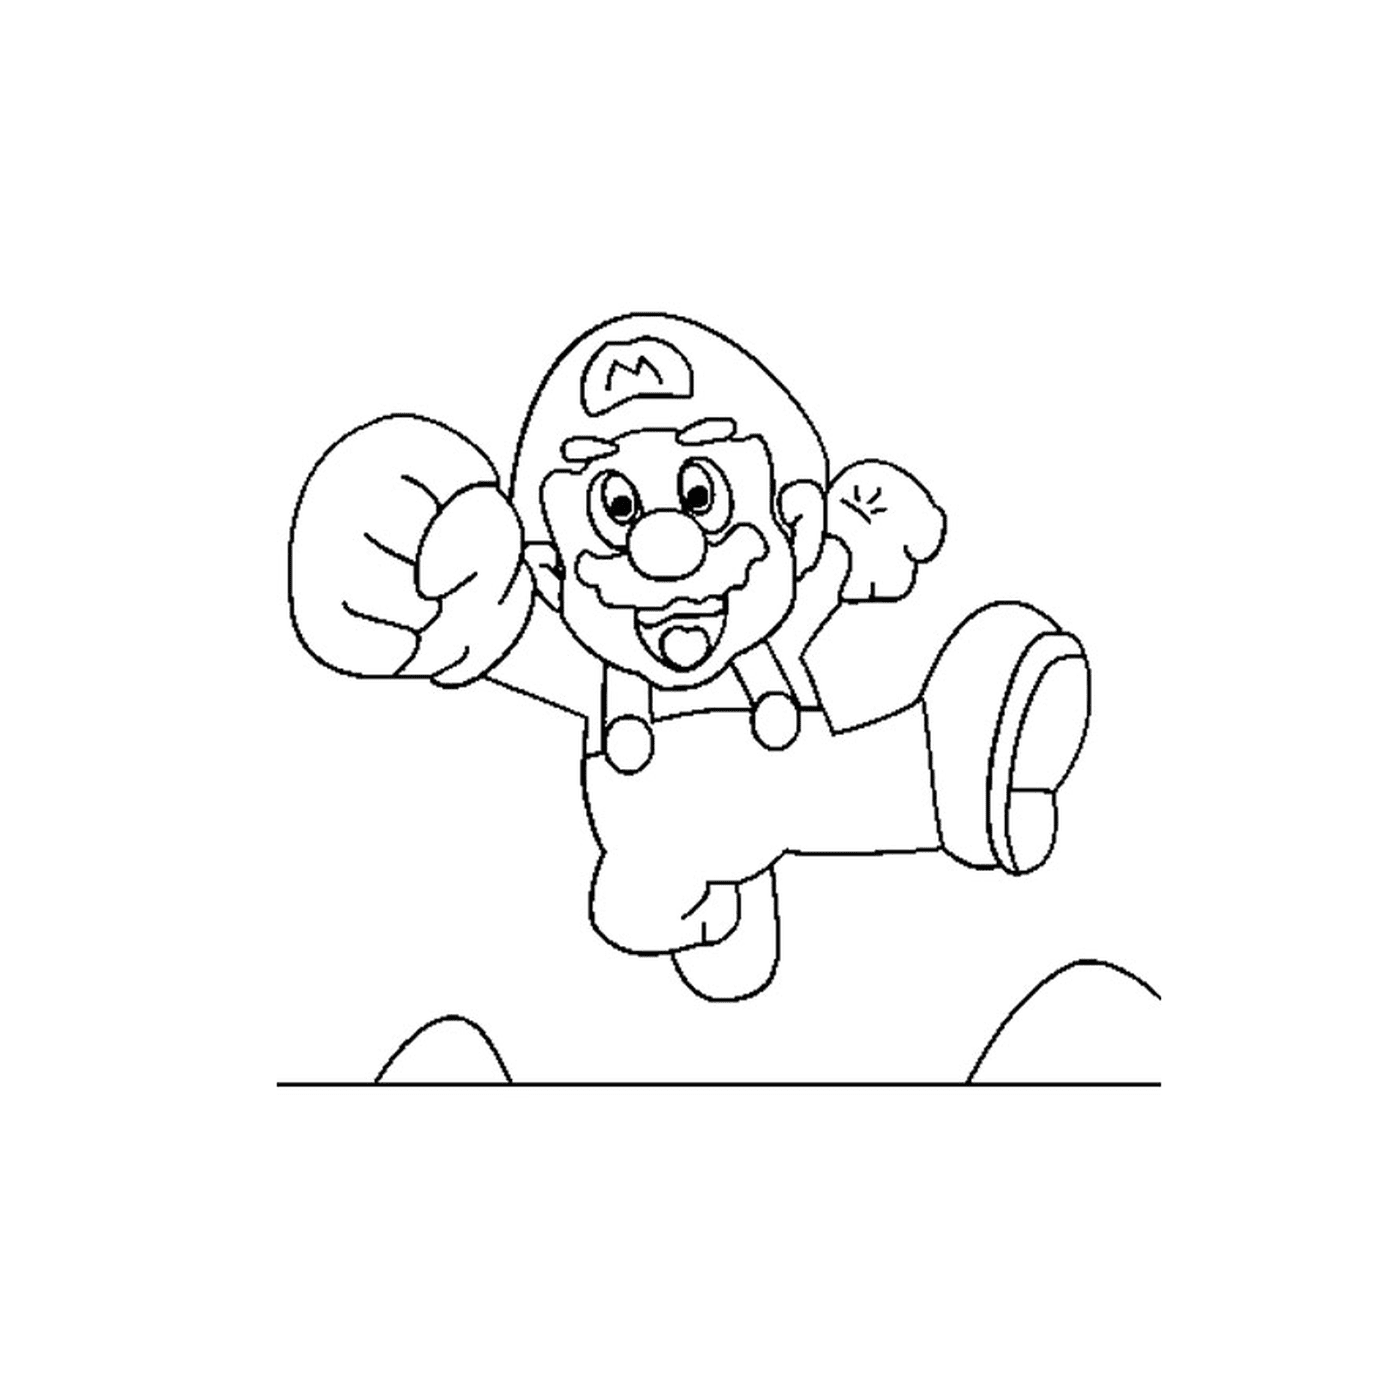  A Super Mario 